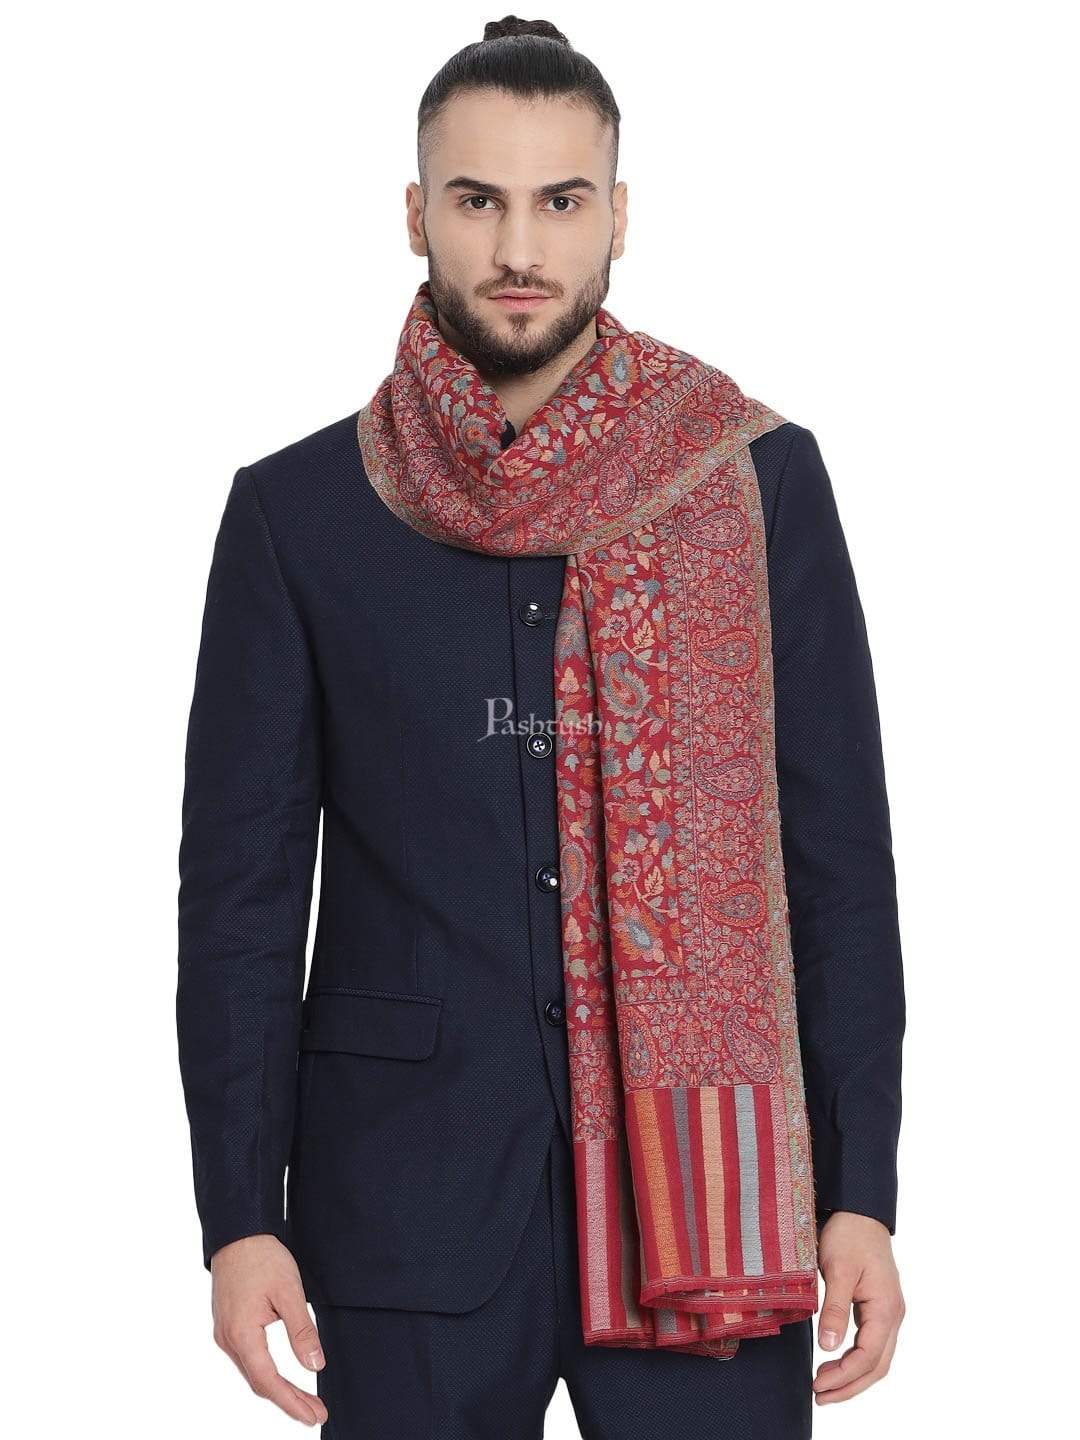 Pashtush India 100x200 Pashtush Mens Fine Wool Ethnic Weave Stole, Soft and Warm